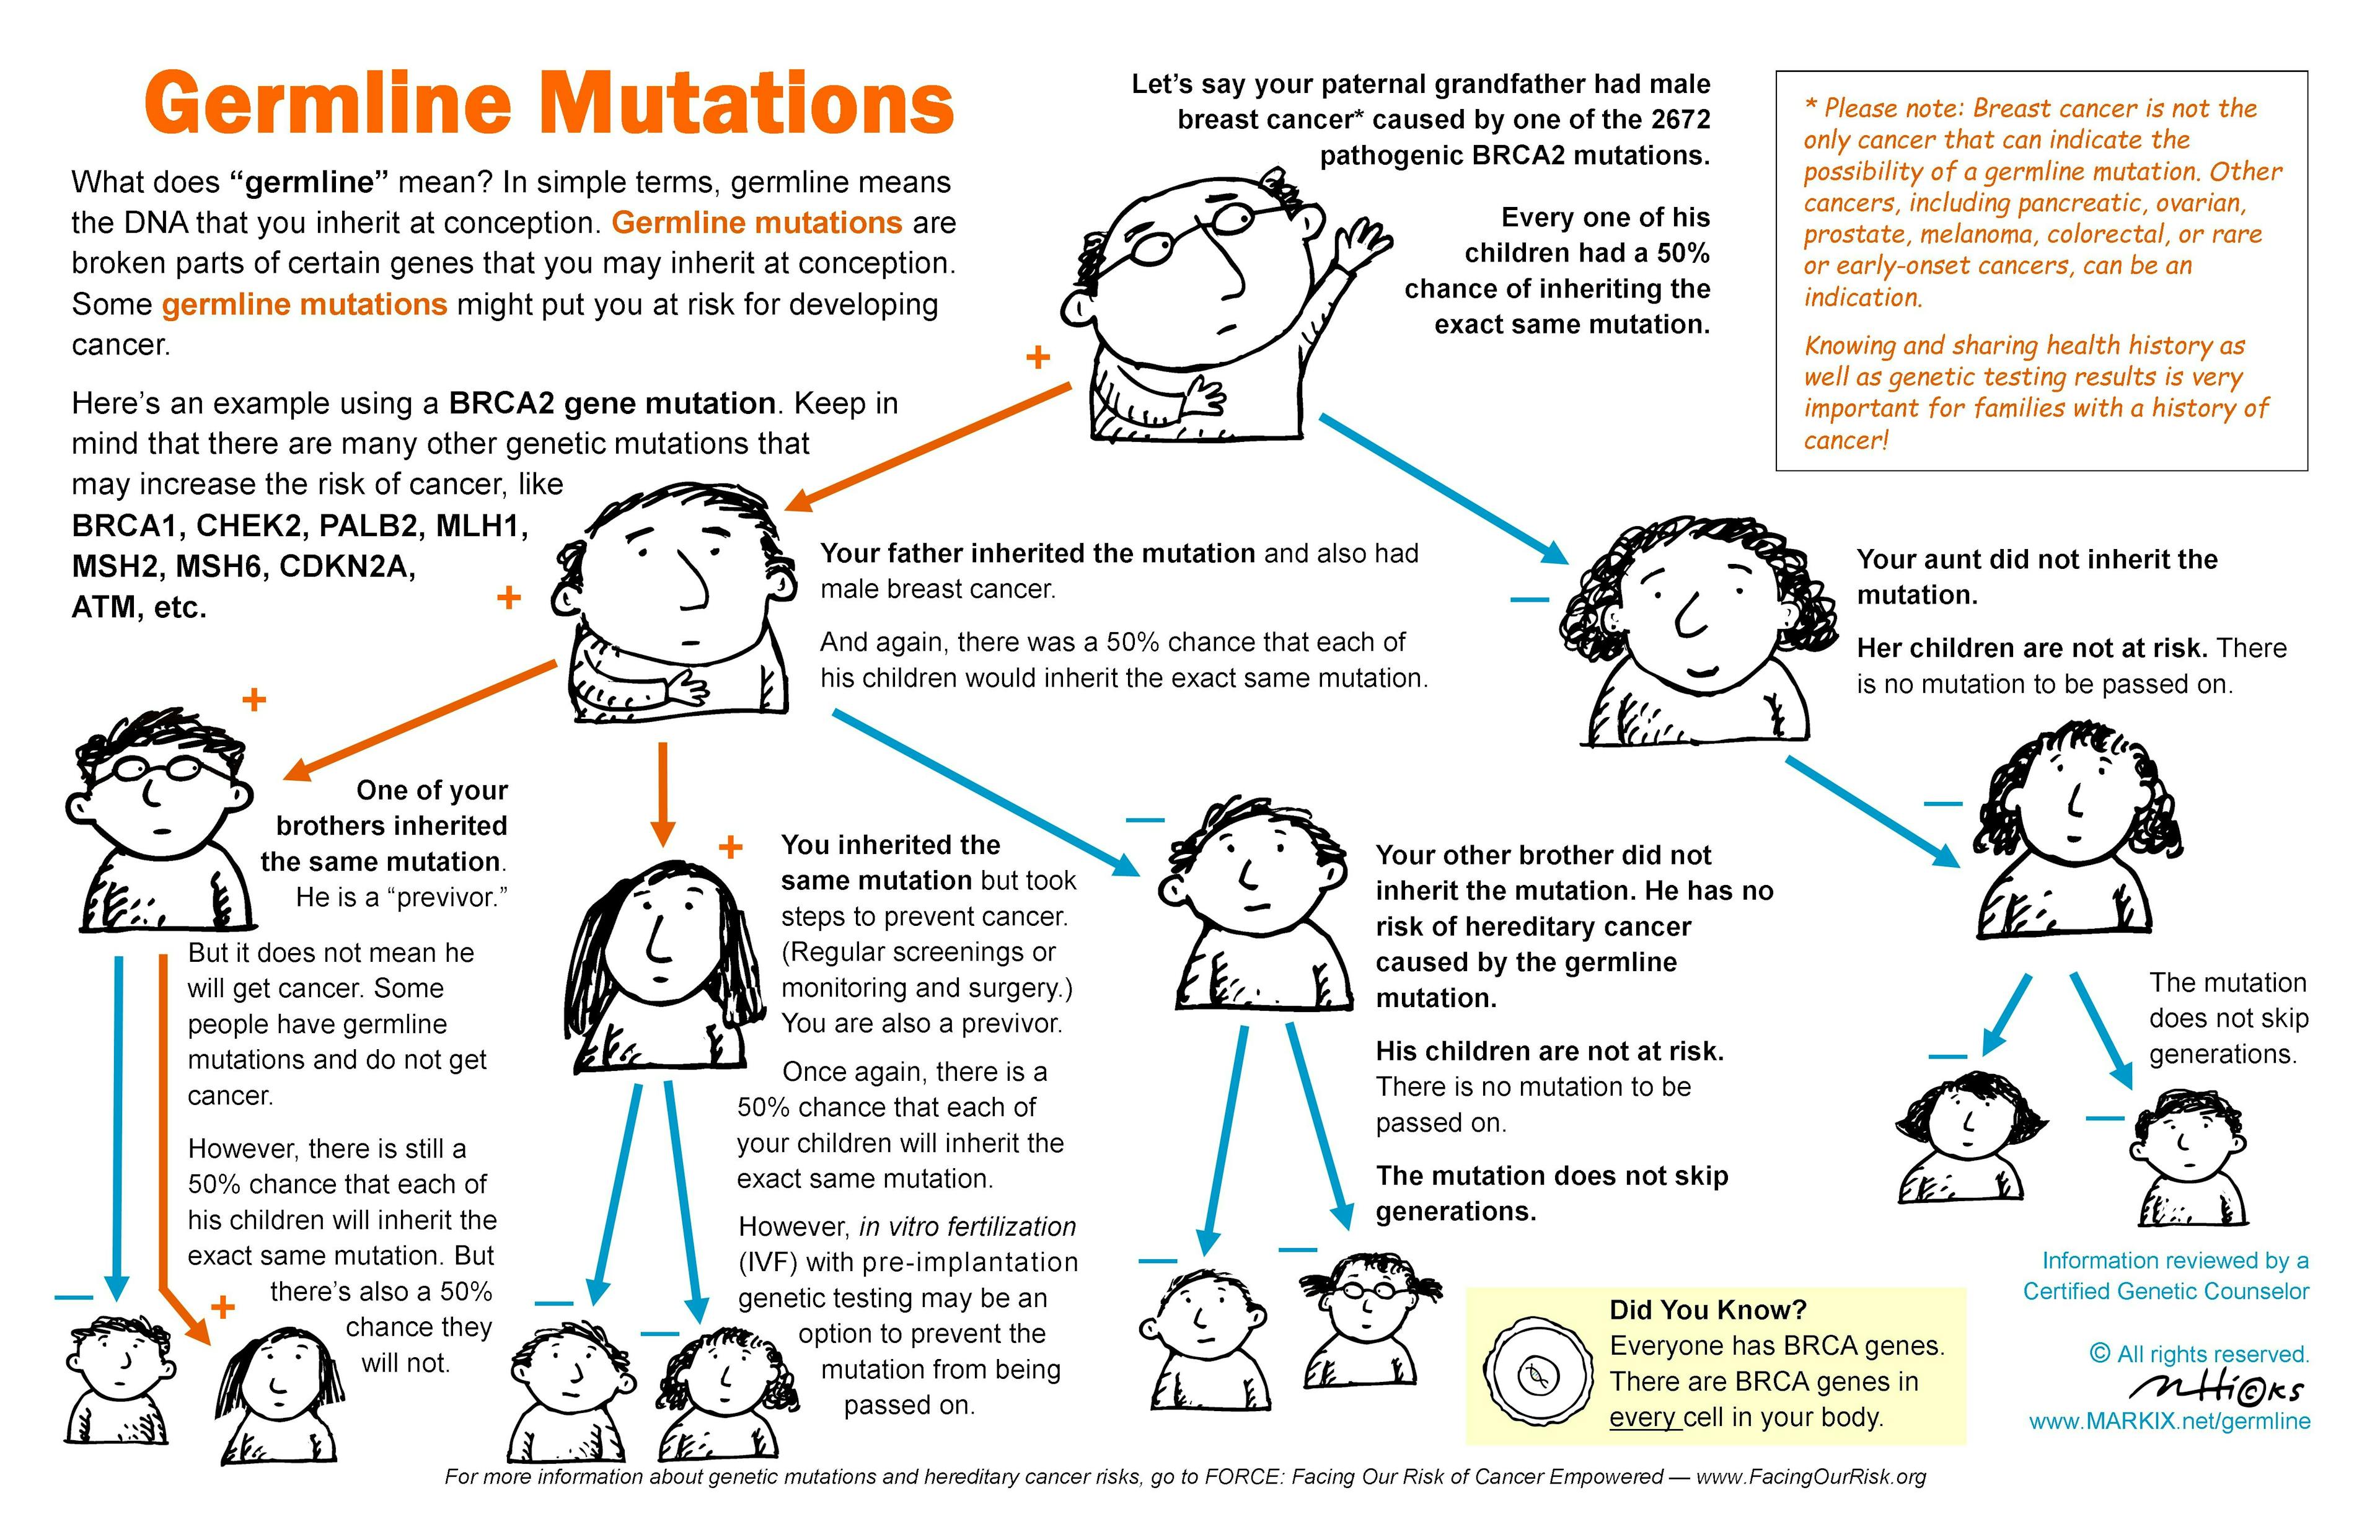 Flowchart explaining how germline mutations work, created by Mark Hicks